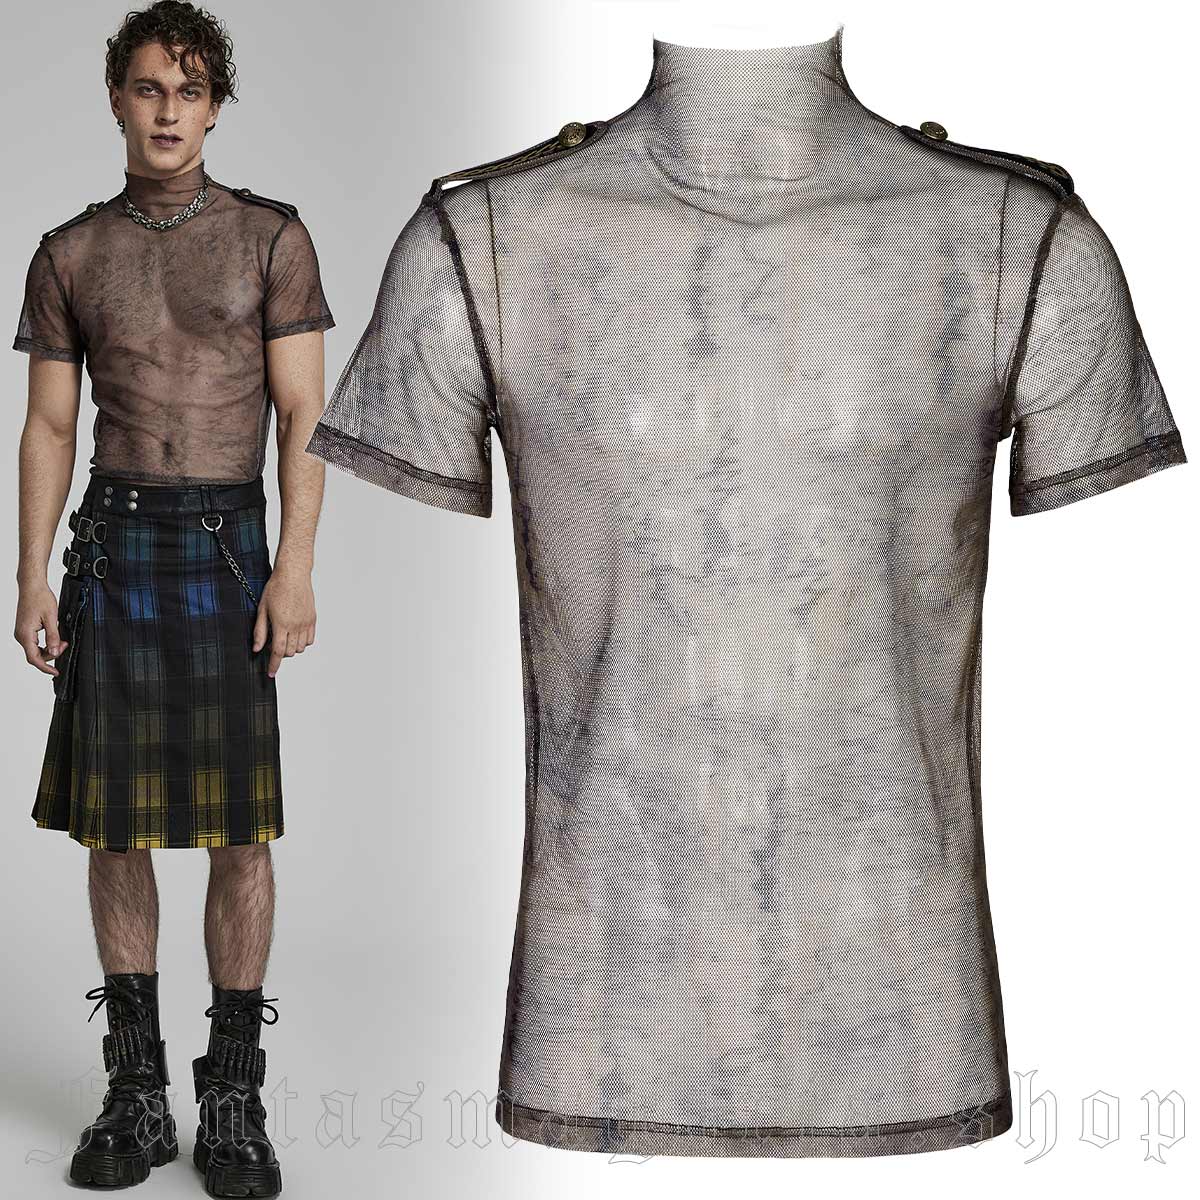 Men's Punk black abstract pattern mesh short sleeve high neck t-shirt top. - Punk Rave - WT-802TDM/CO